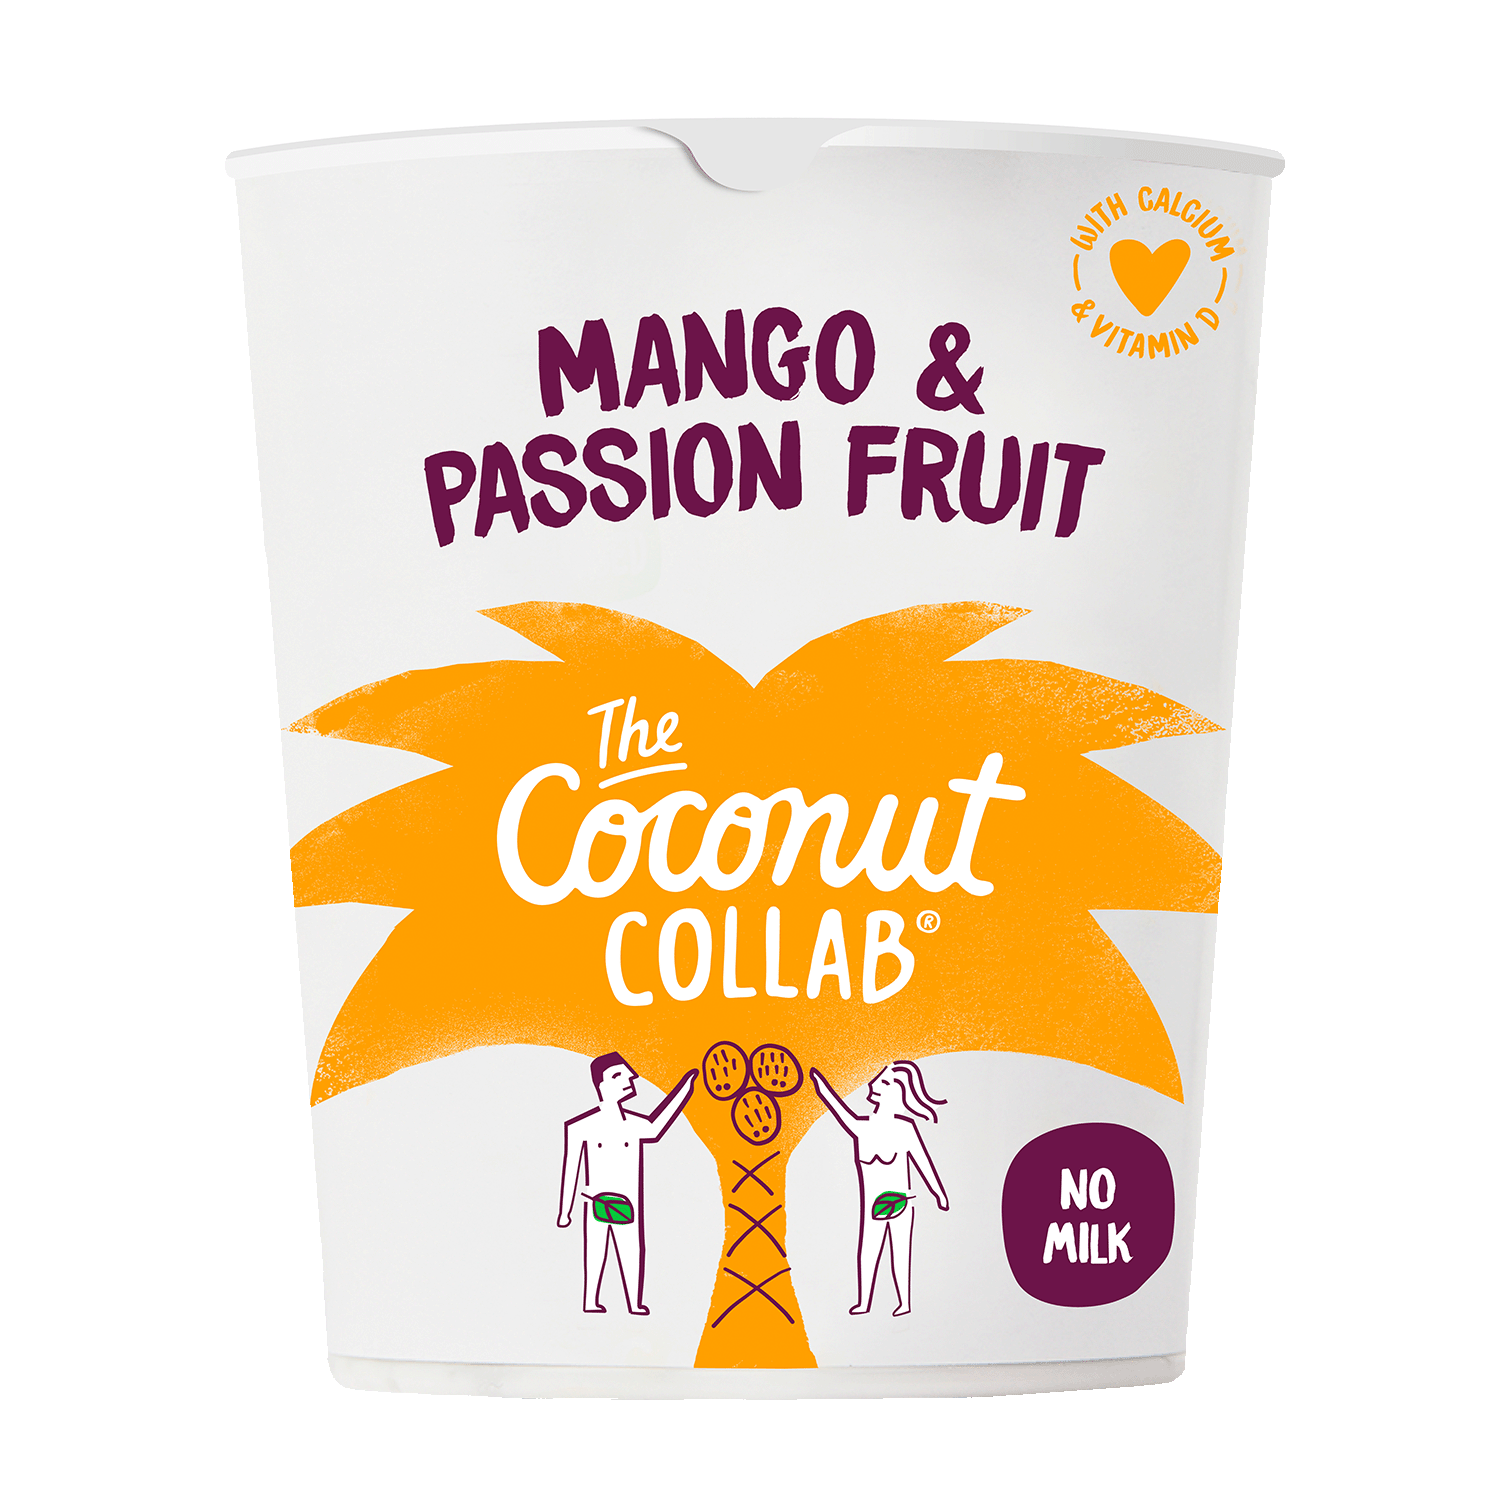 Kokosnusszubereitung Mango & Passionsfrucht, 360g